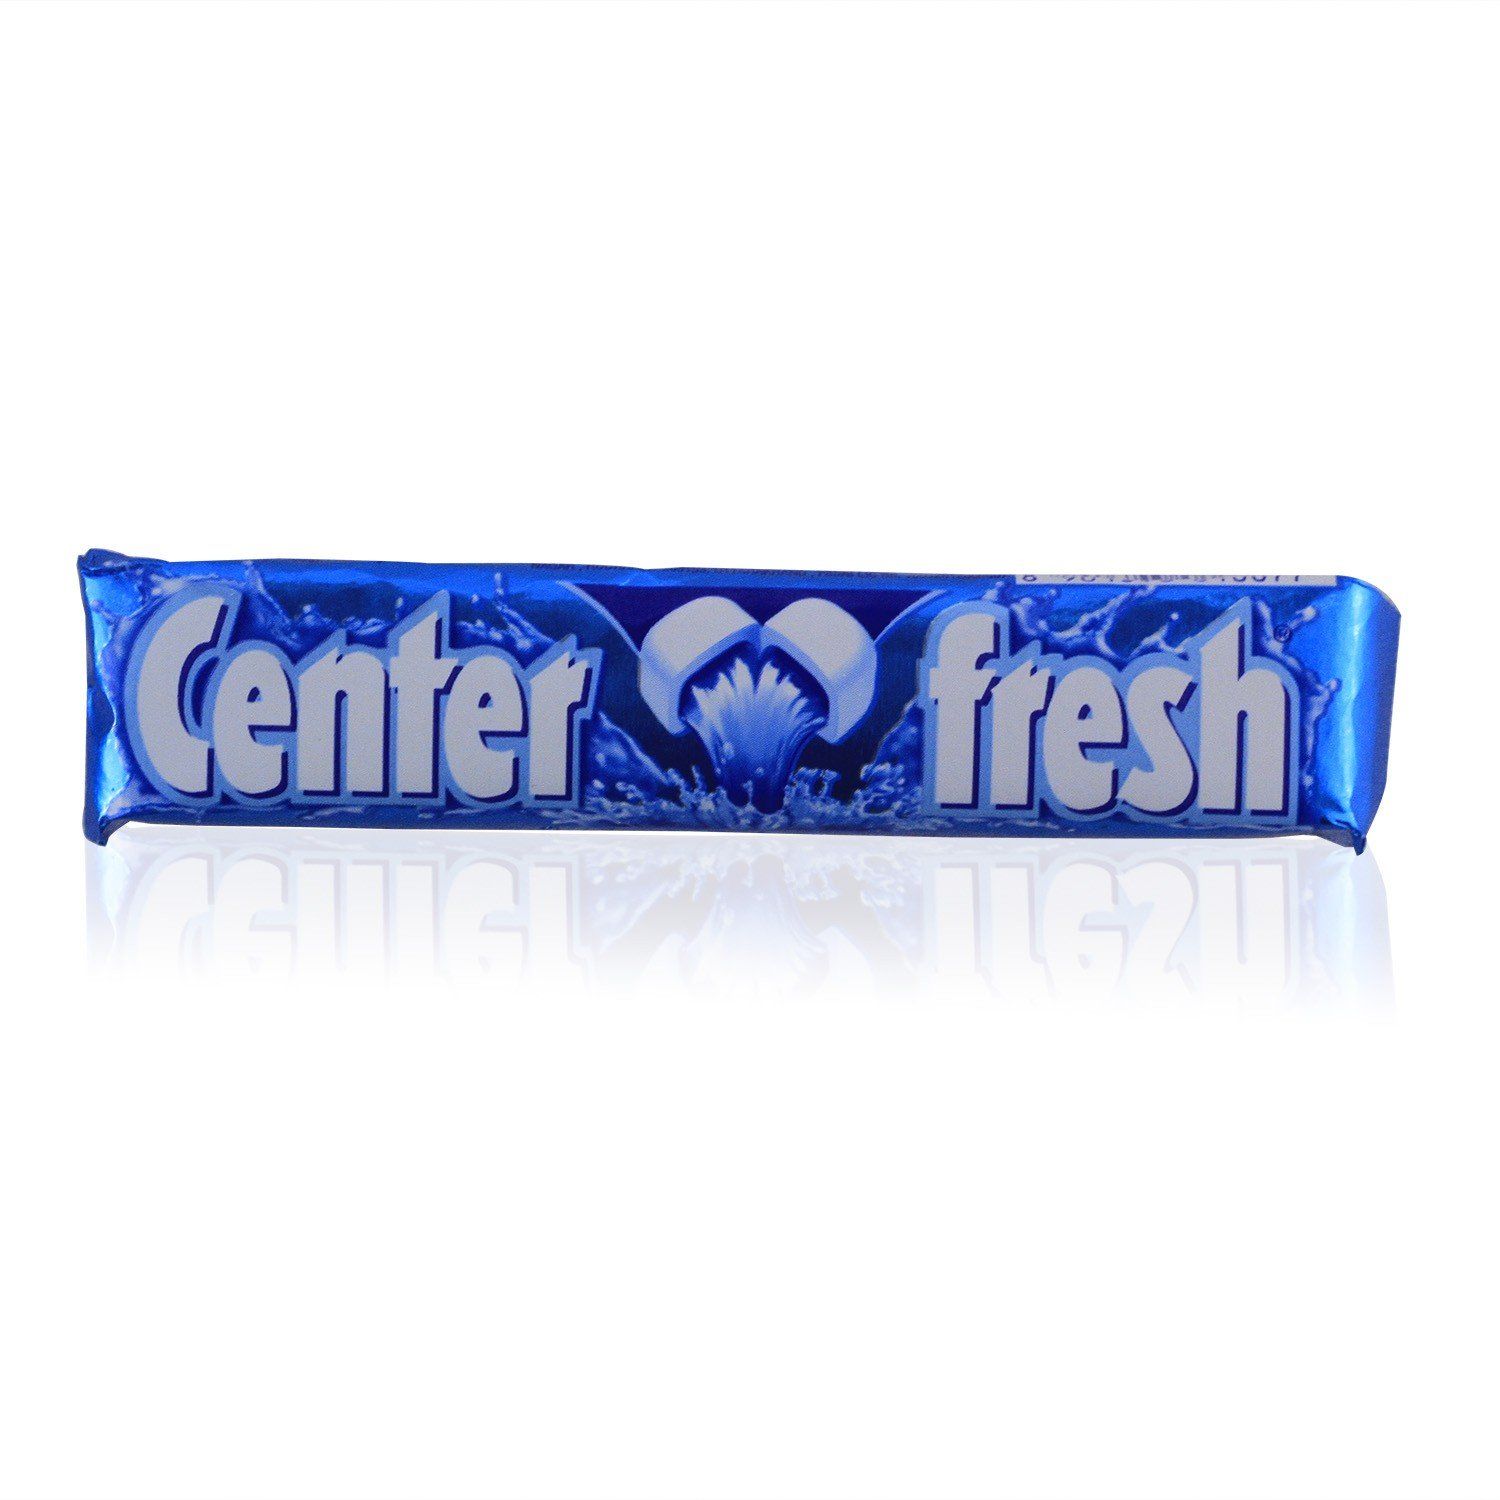 Center Fresh Spearmint Chewing Gum Image